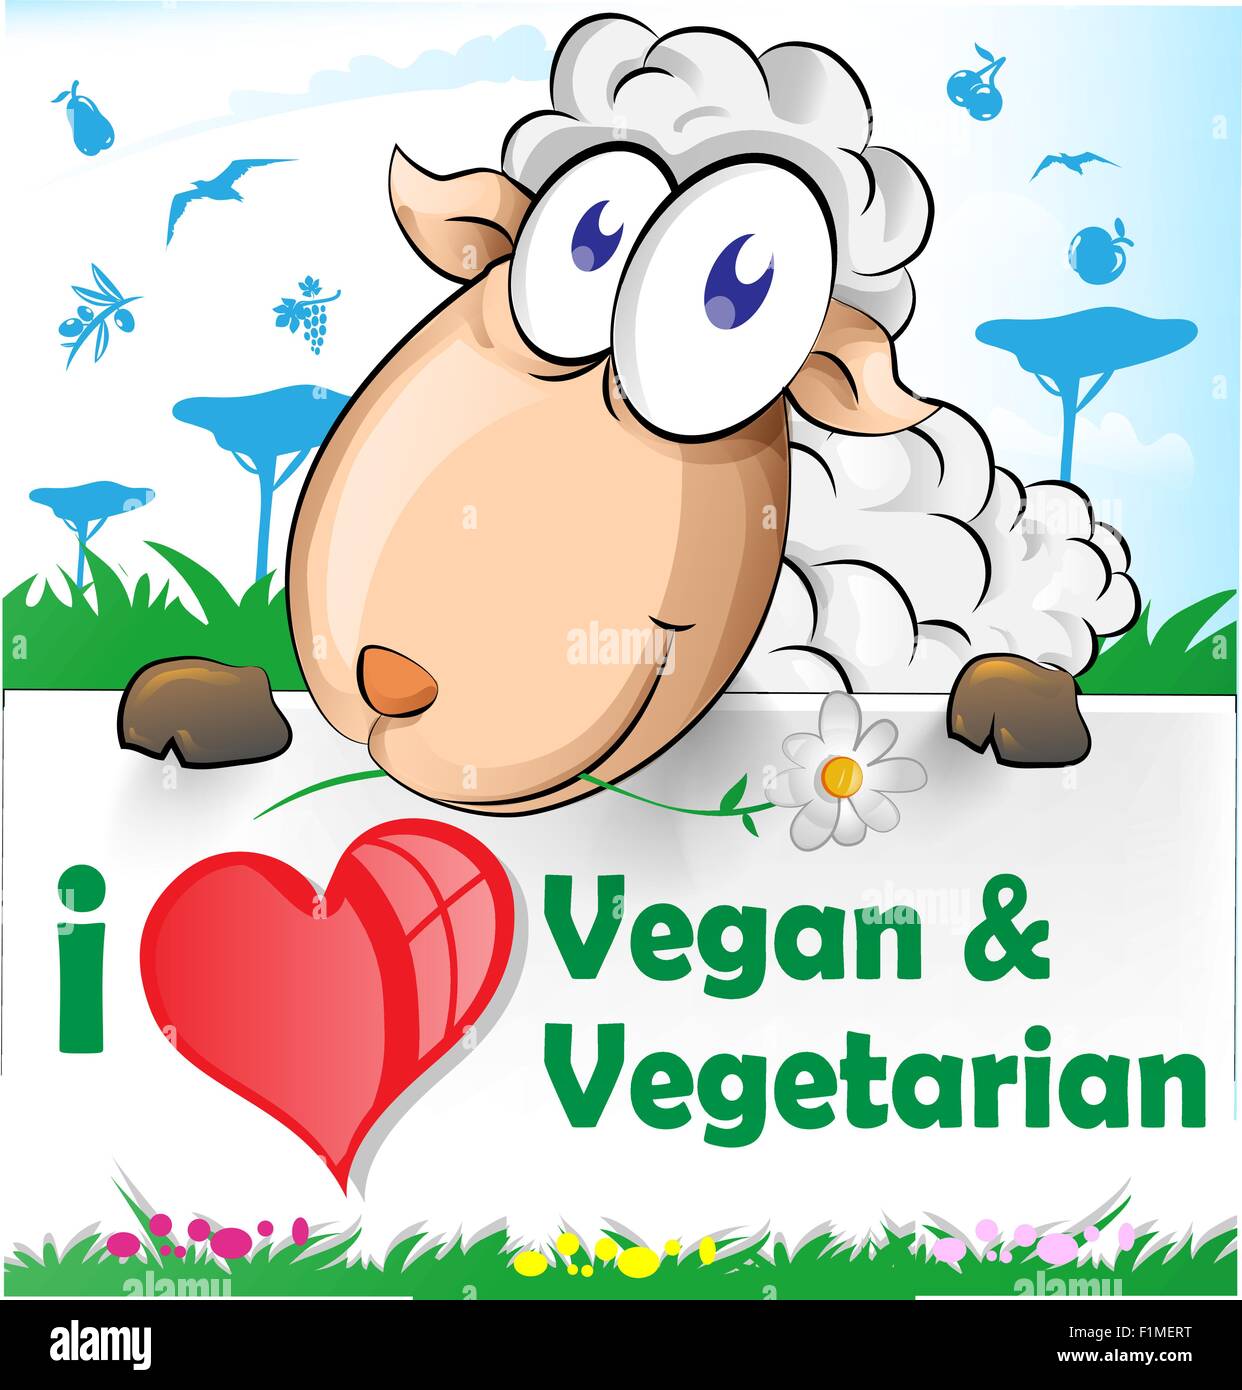 sheep cartoon with vegetarian and vegan banner Stock Vector